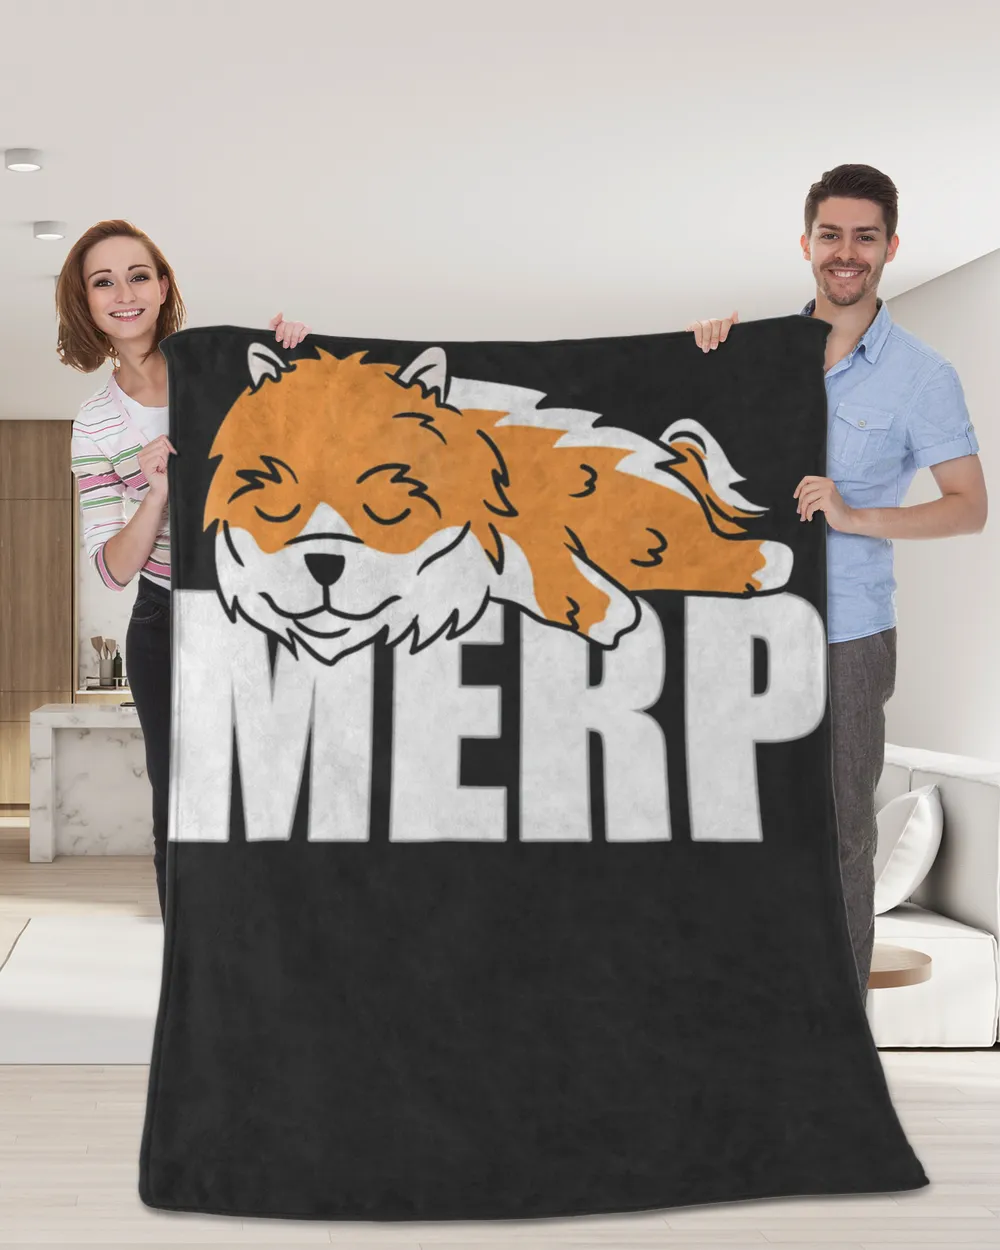 Pomeranian Internet Dank Meme Merp T-Shirt Gifts Women Men